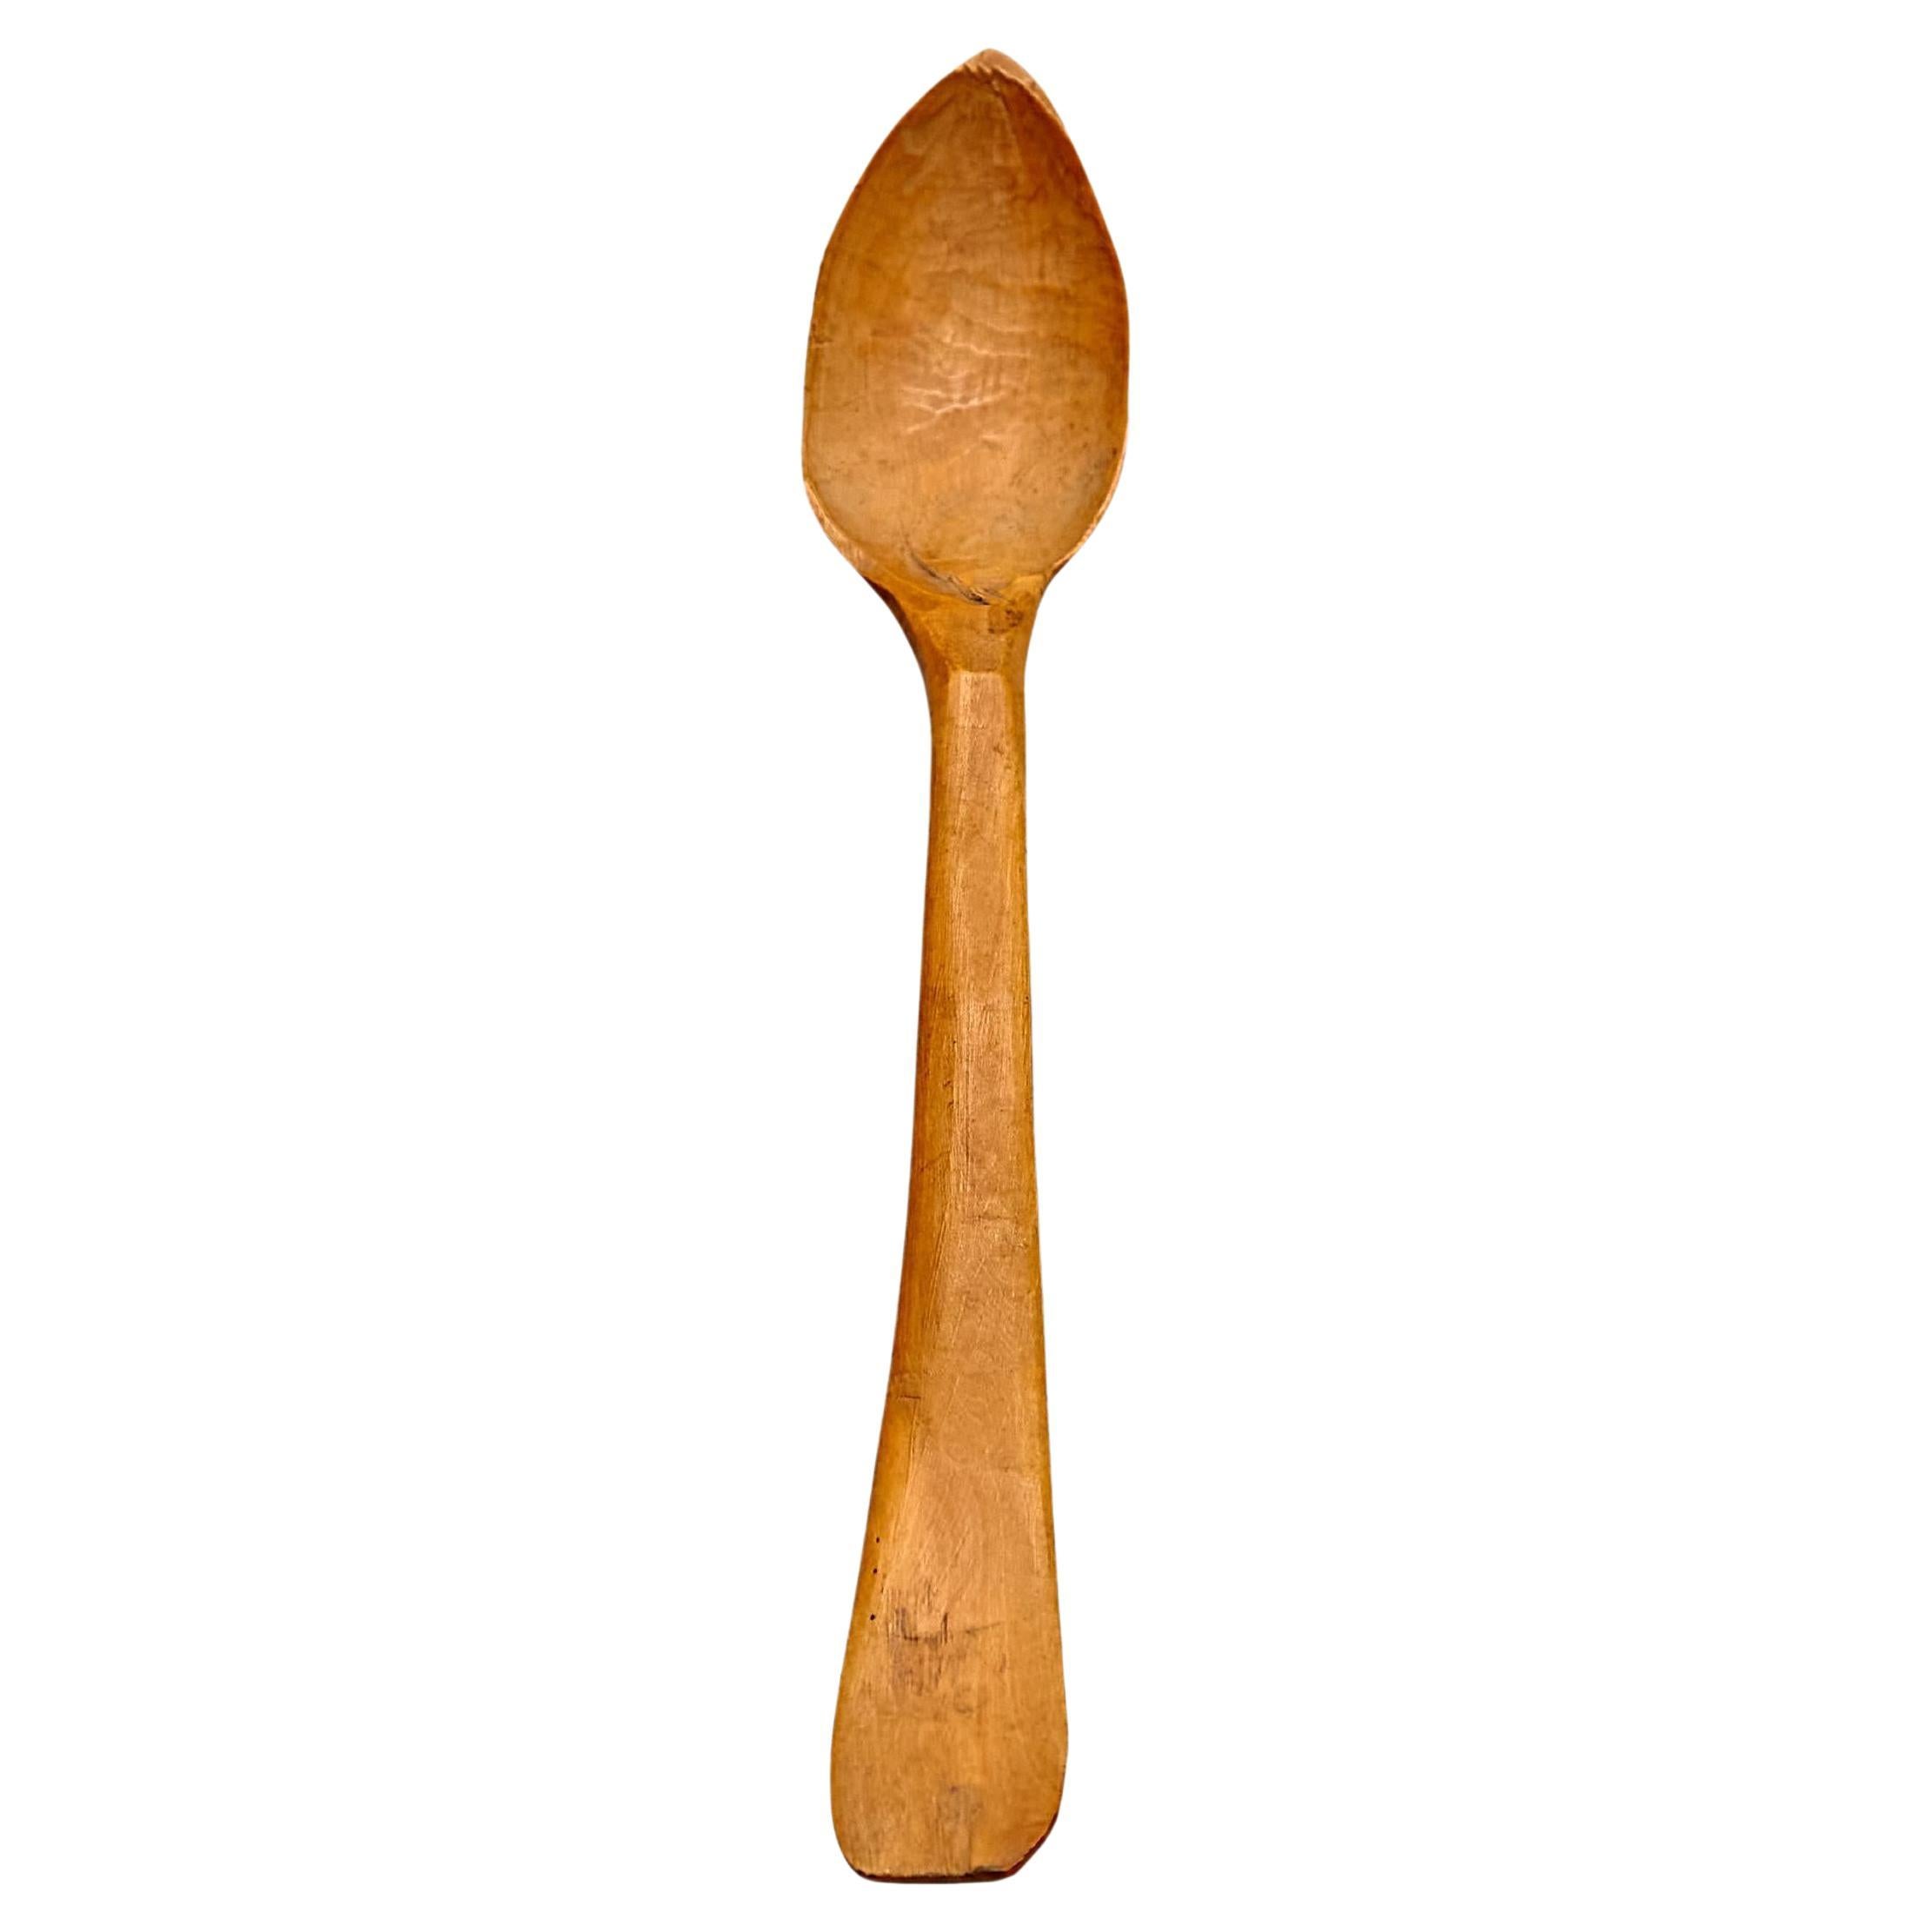 Rustic Primitive Pastor Handmade Wood Spoon, circa 1930